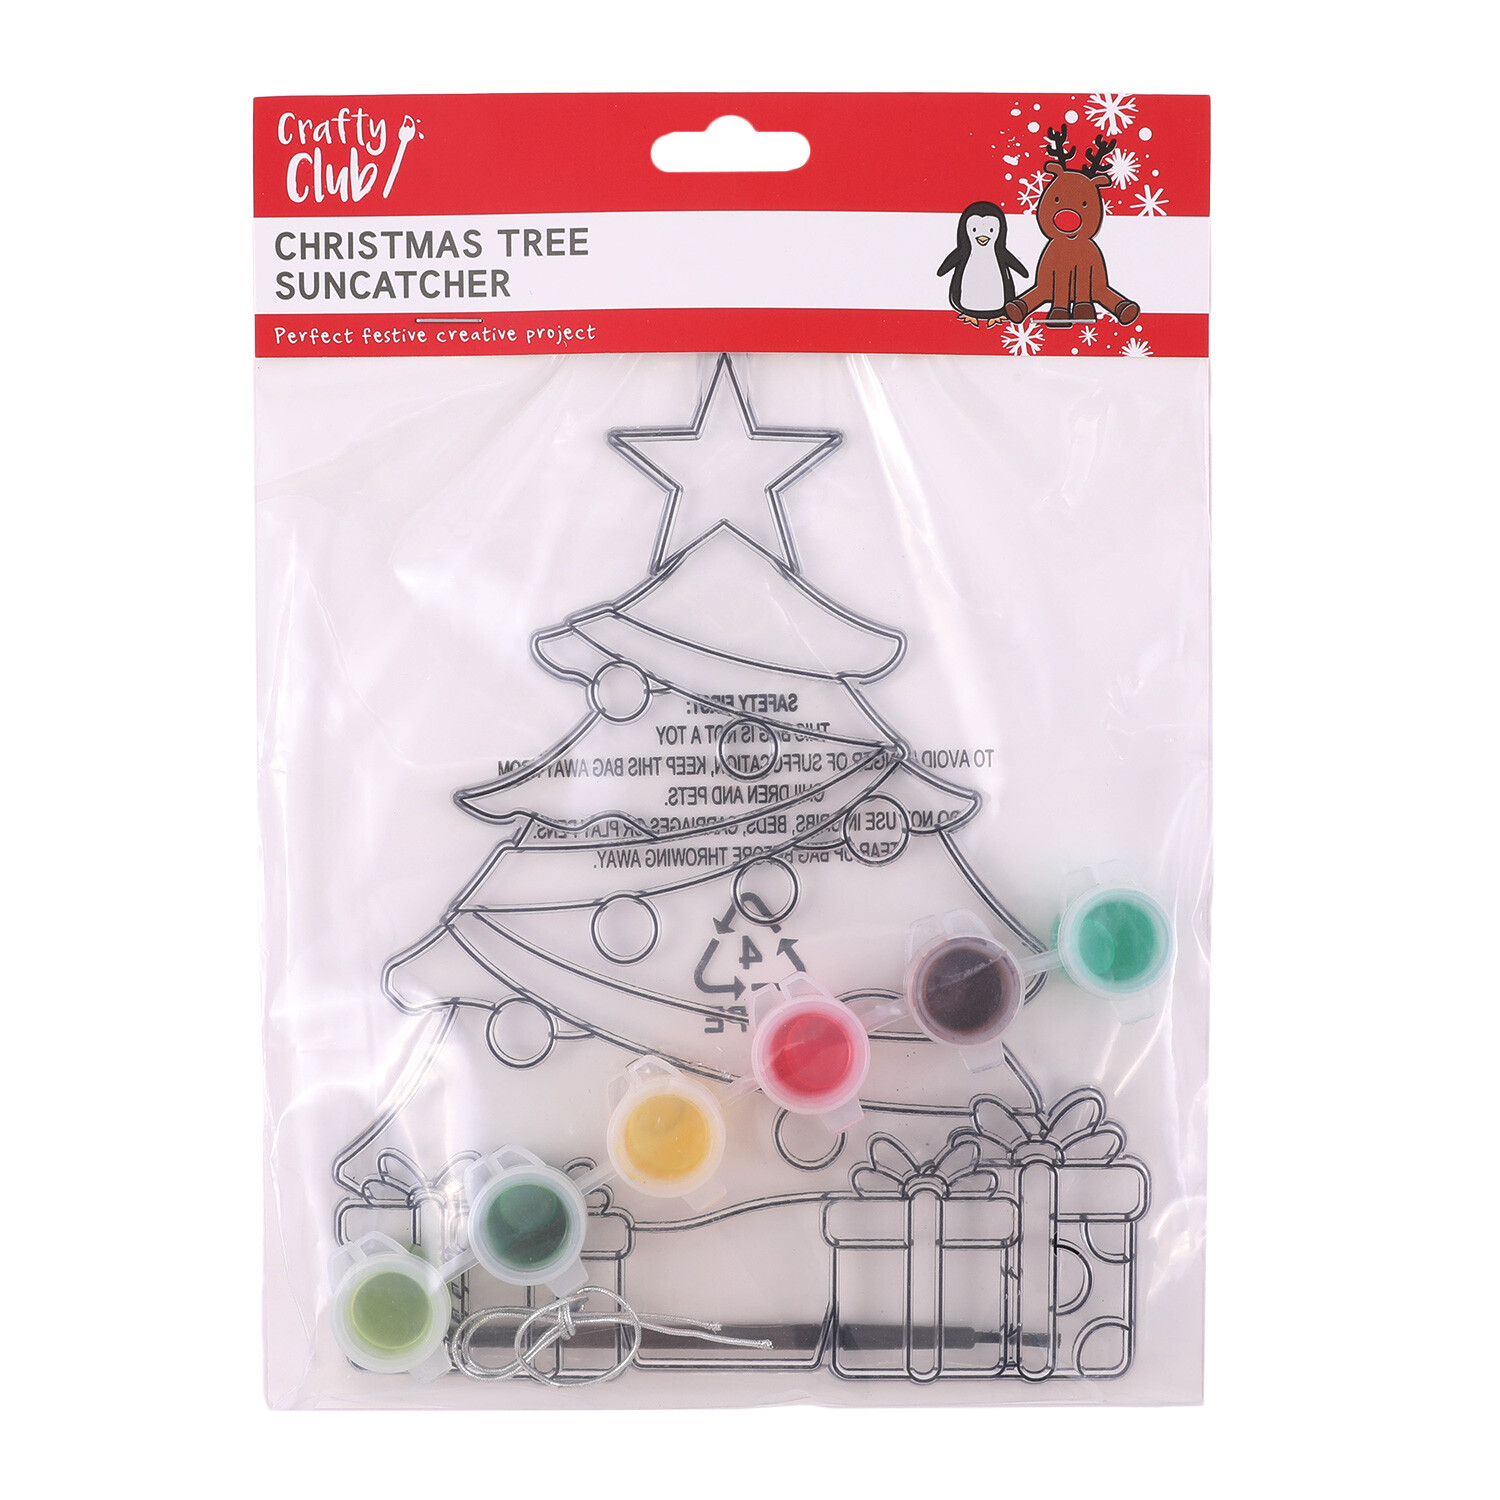 Crafty Club Christmas Tree Suncatcher Image 1